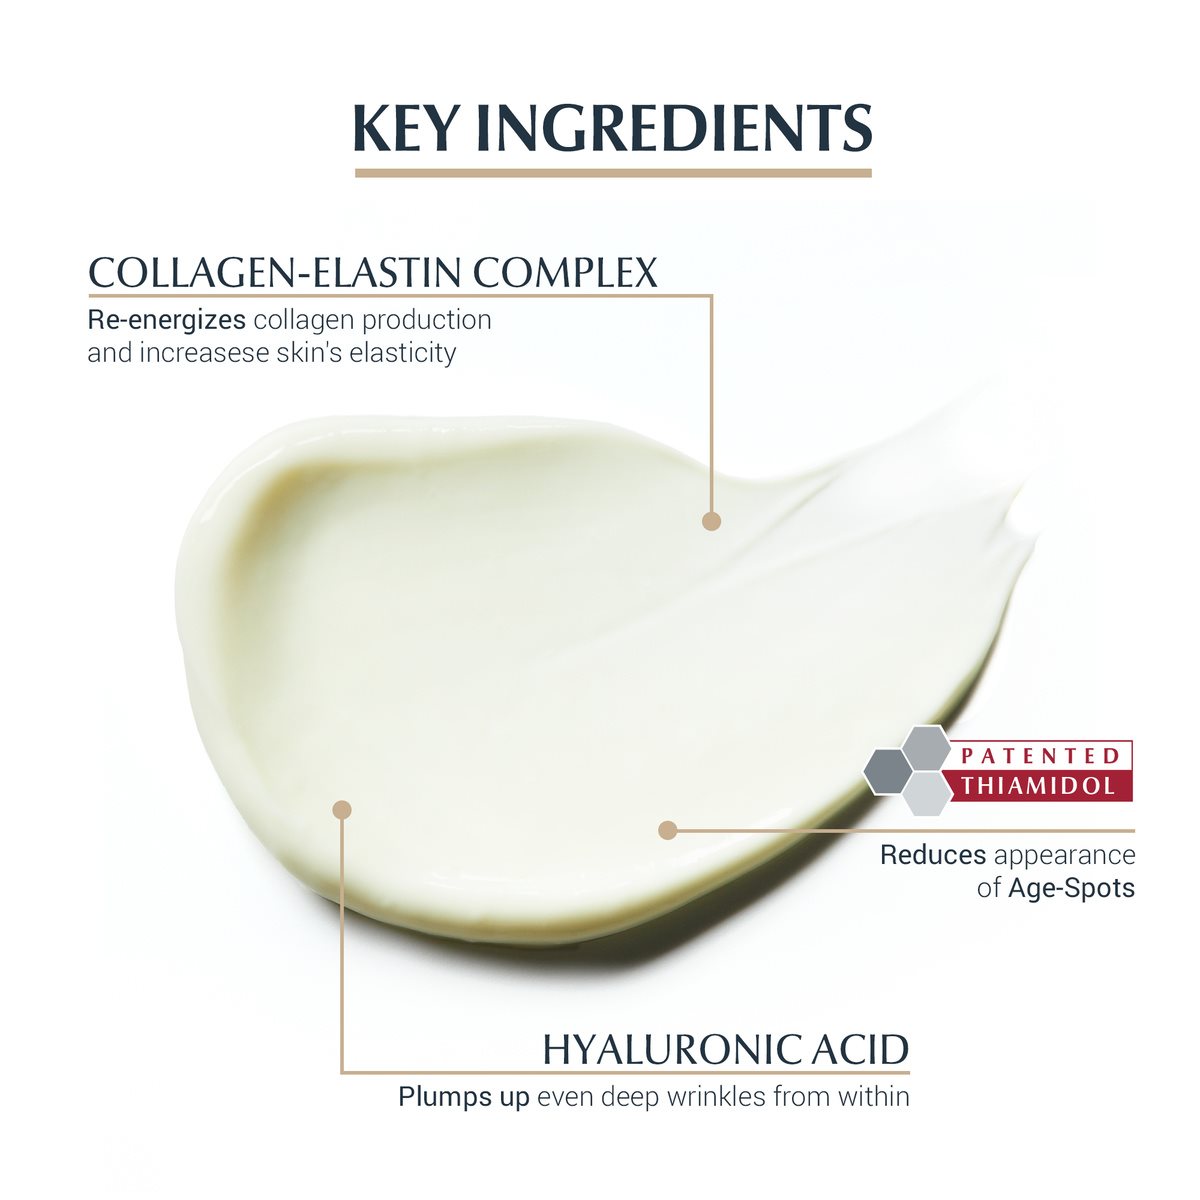 Key Ingredients: Hyaluronic Acid, Collagen-Elastin Complex, Thiamidol 